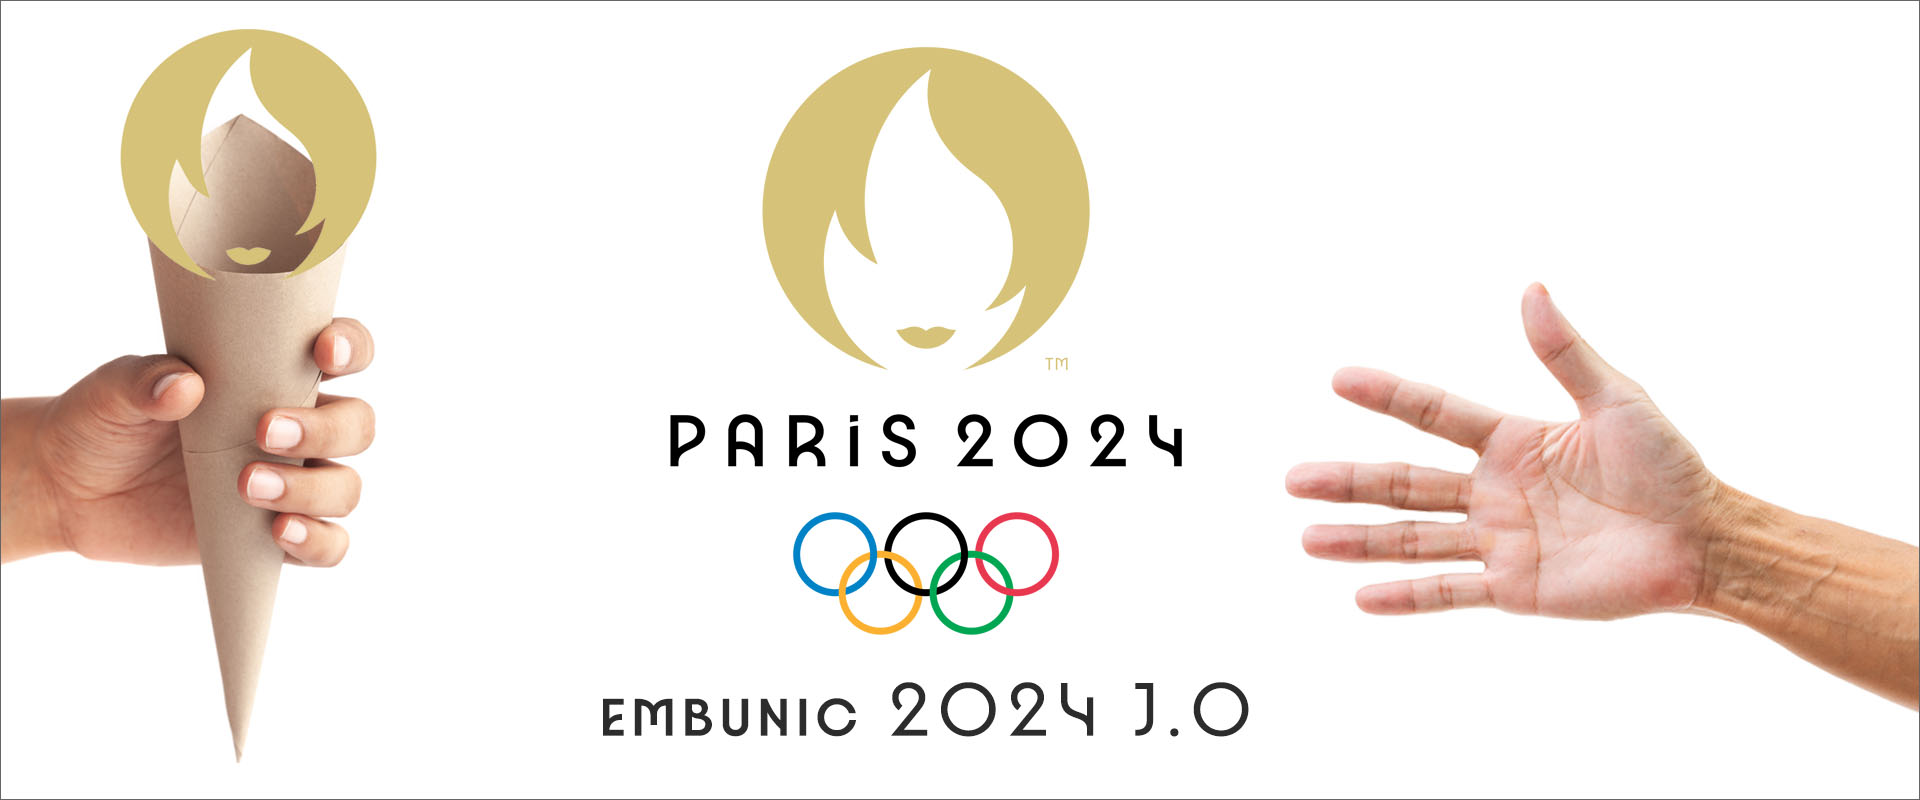 J.O EMBUNIC 2024 Flamme Olympique